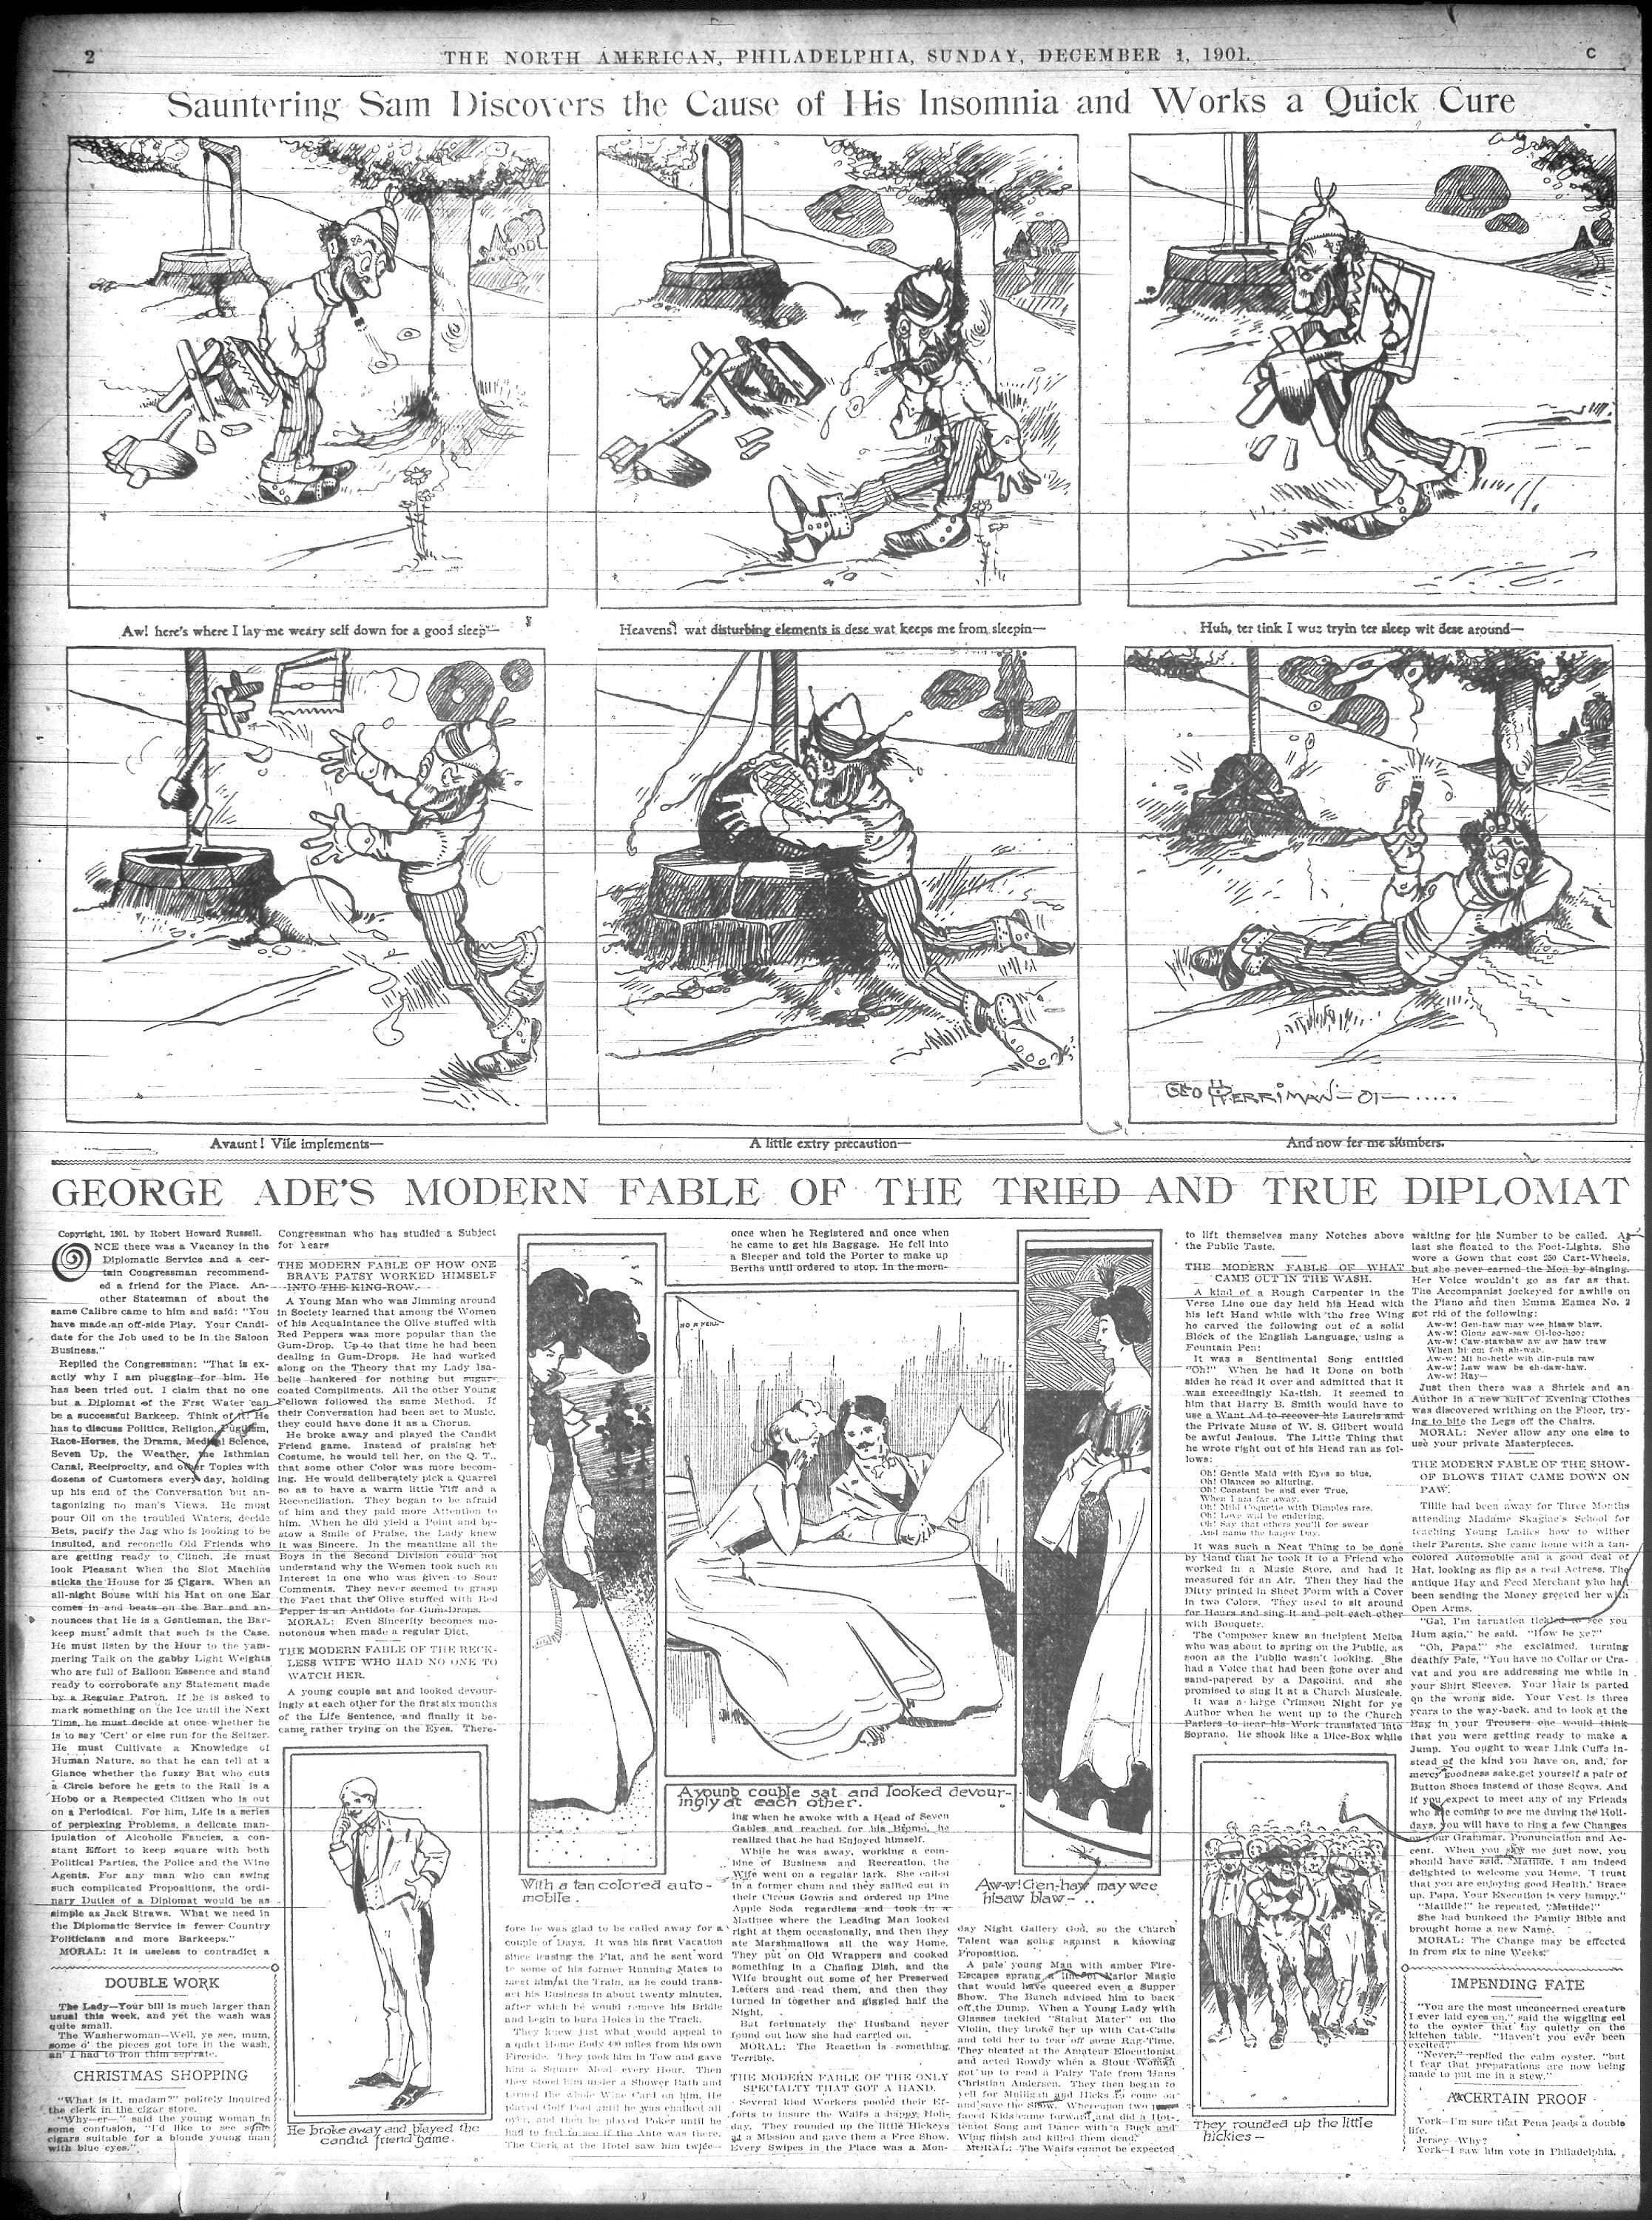 05-phillyna-12-1-1901-herriman-comic.jpg